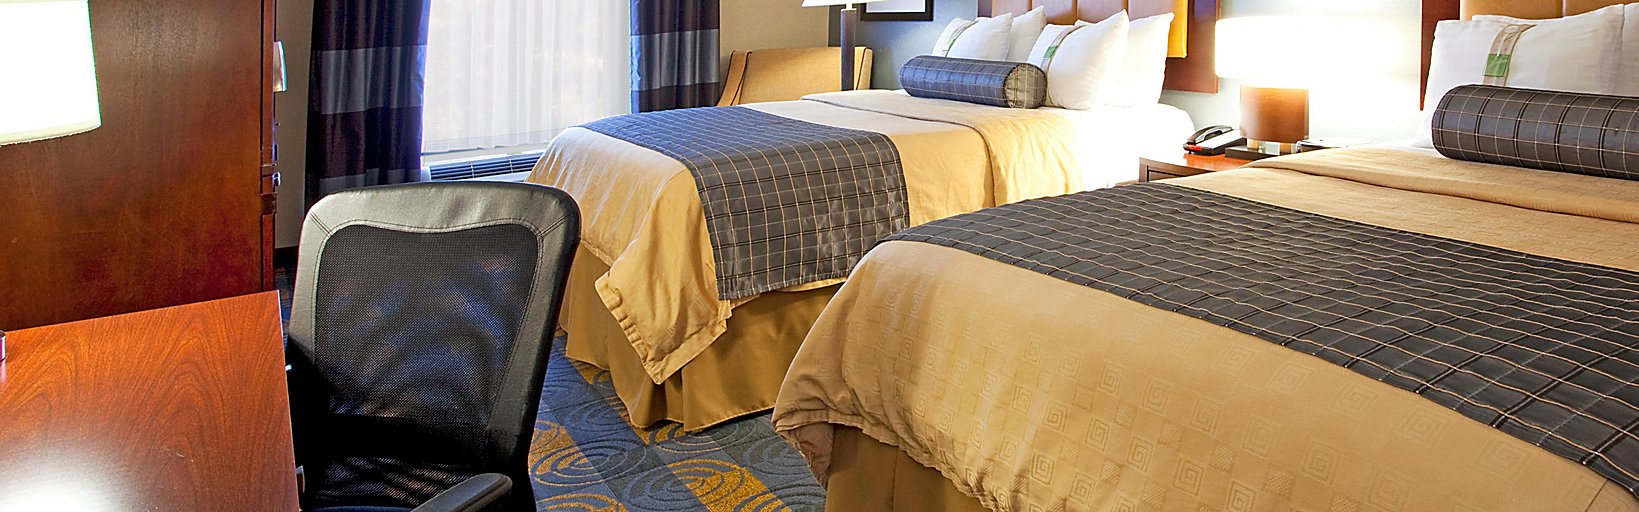 Holiday Inn Stockbridge Hotels Holiday Inn Hotel Suites